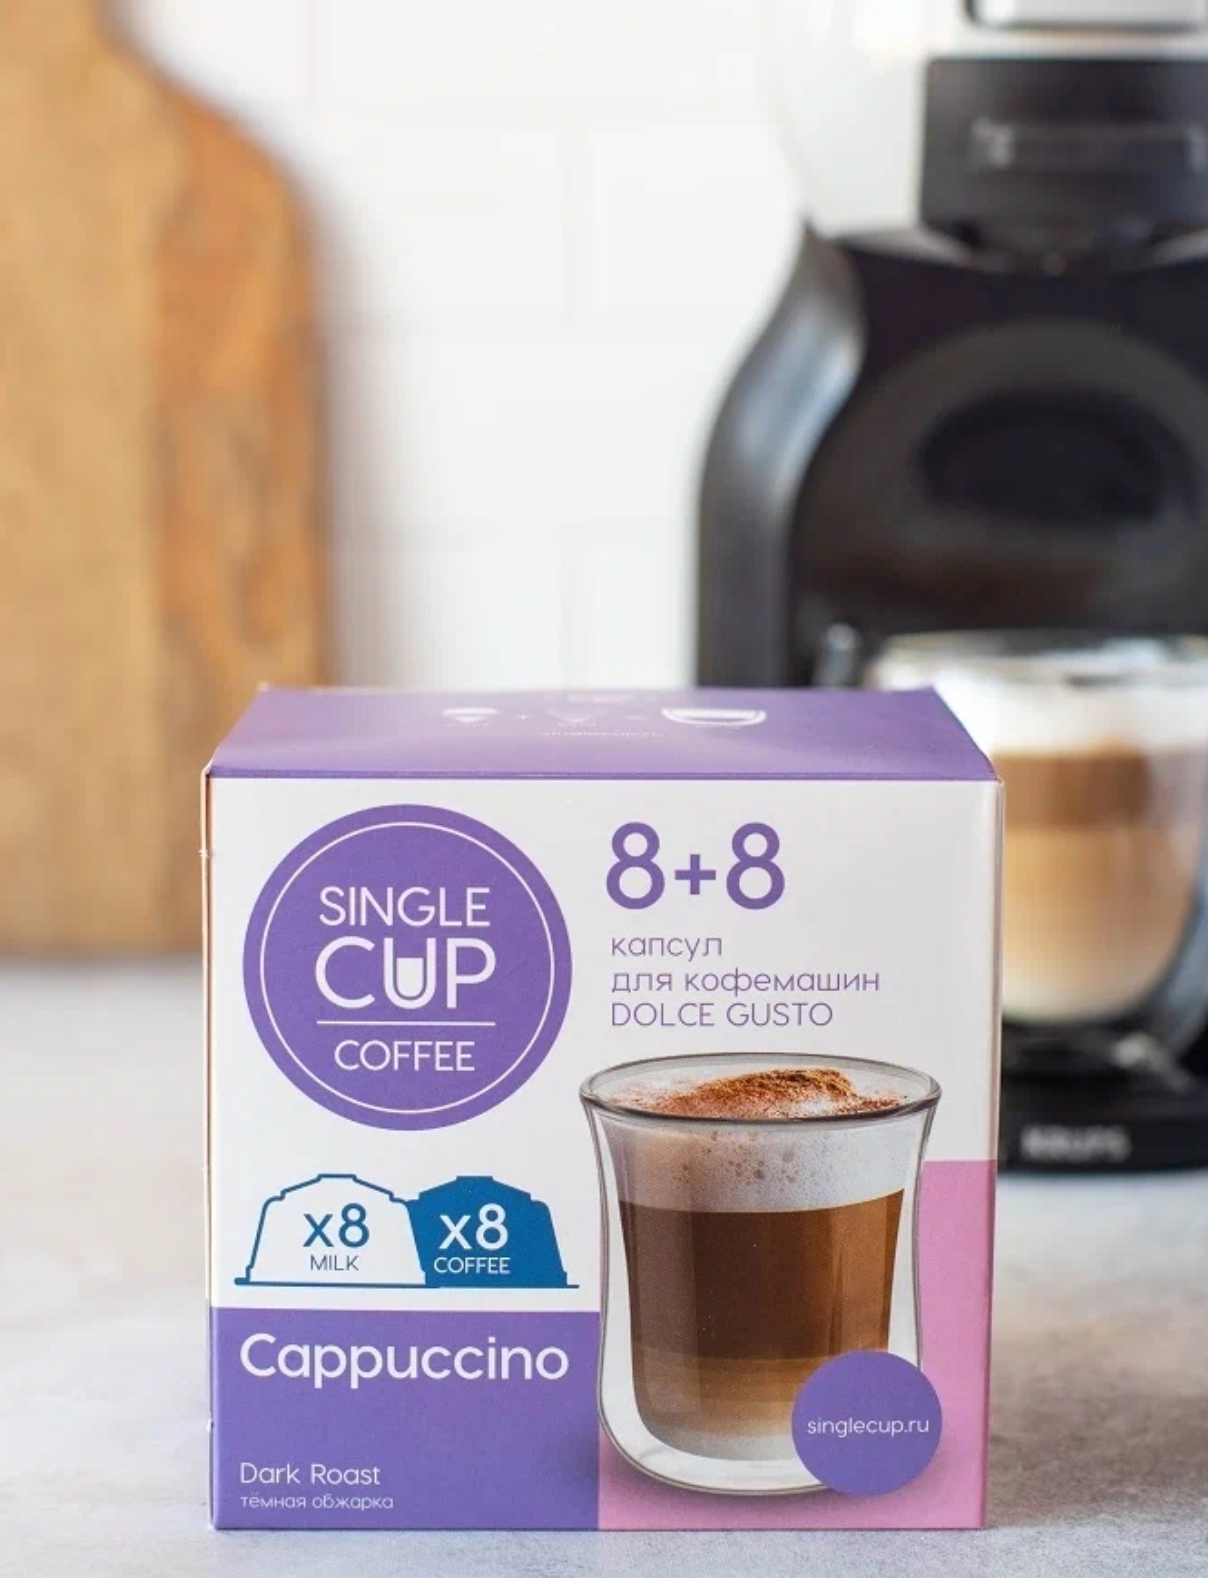 Кофе капсулы Dolce Gusto формат "Cappuccino" 16 шт. со скидкой по промокоду